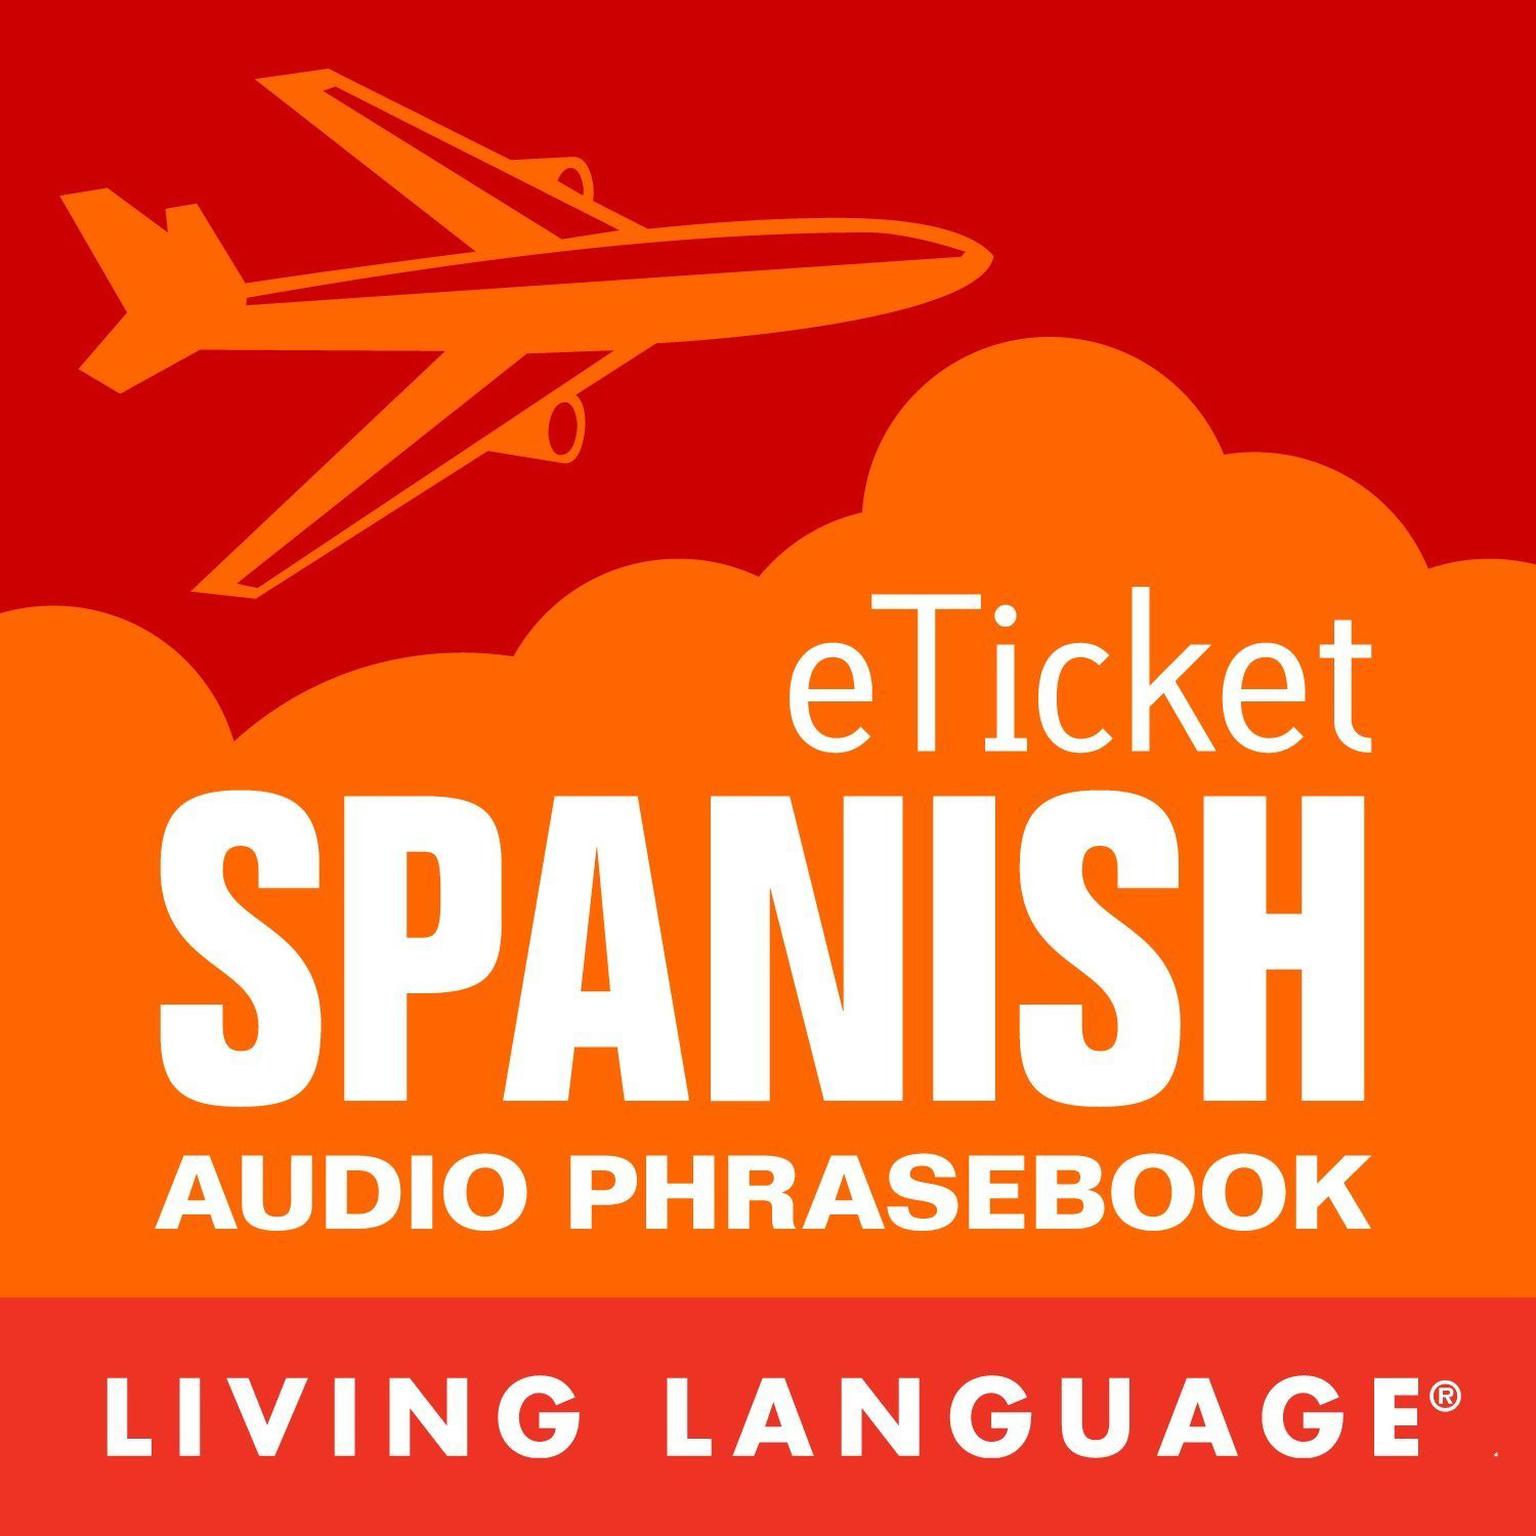 eTicket Spanish Audiobook, by Living Language